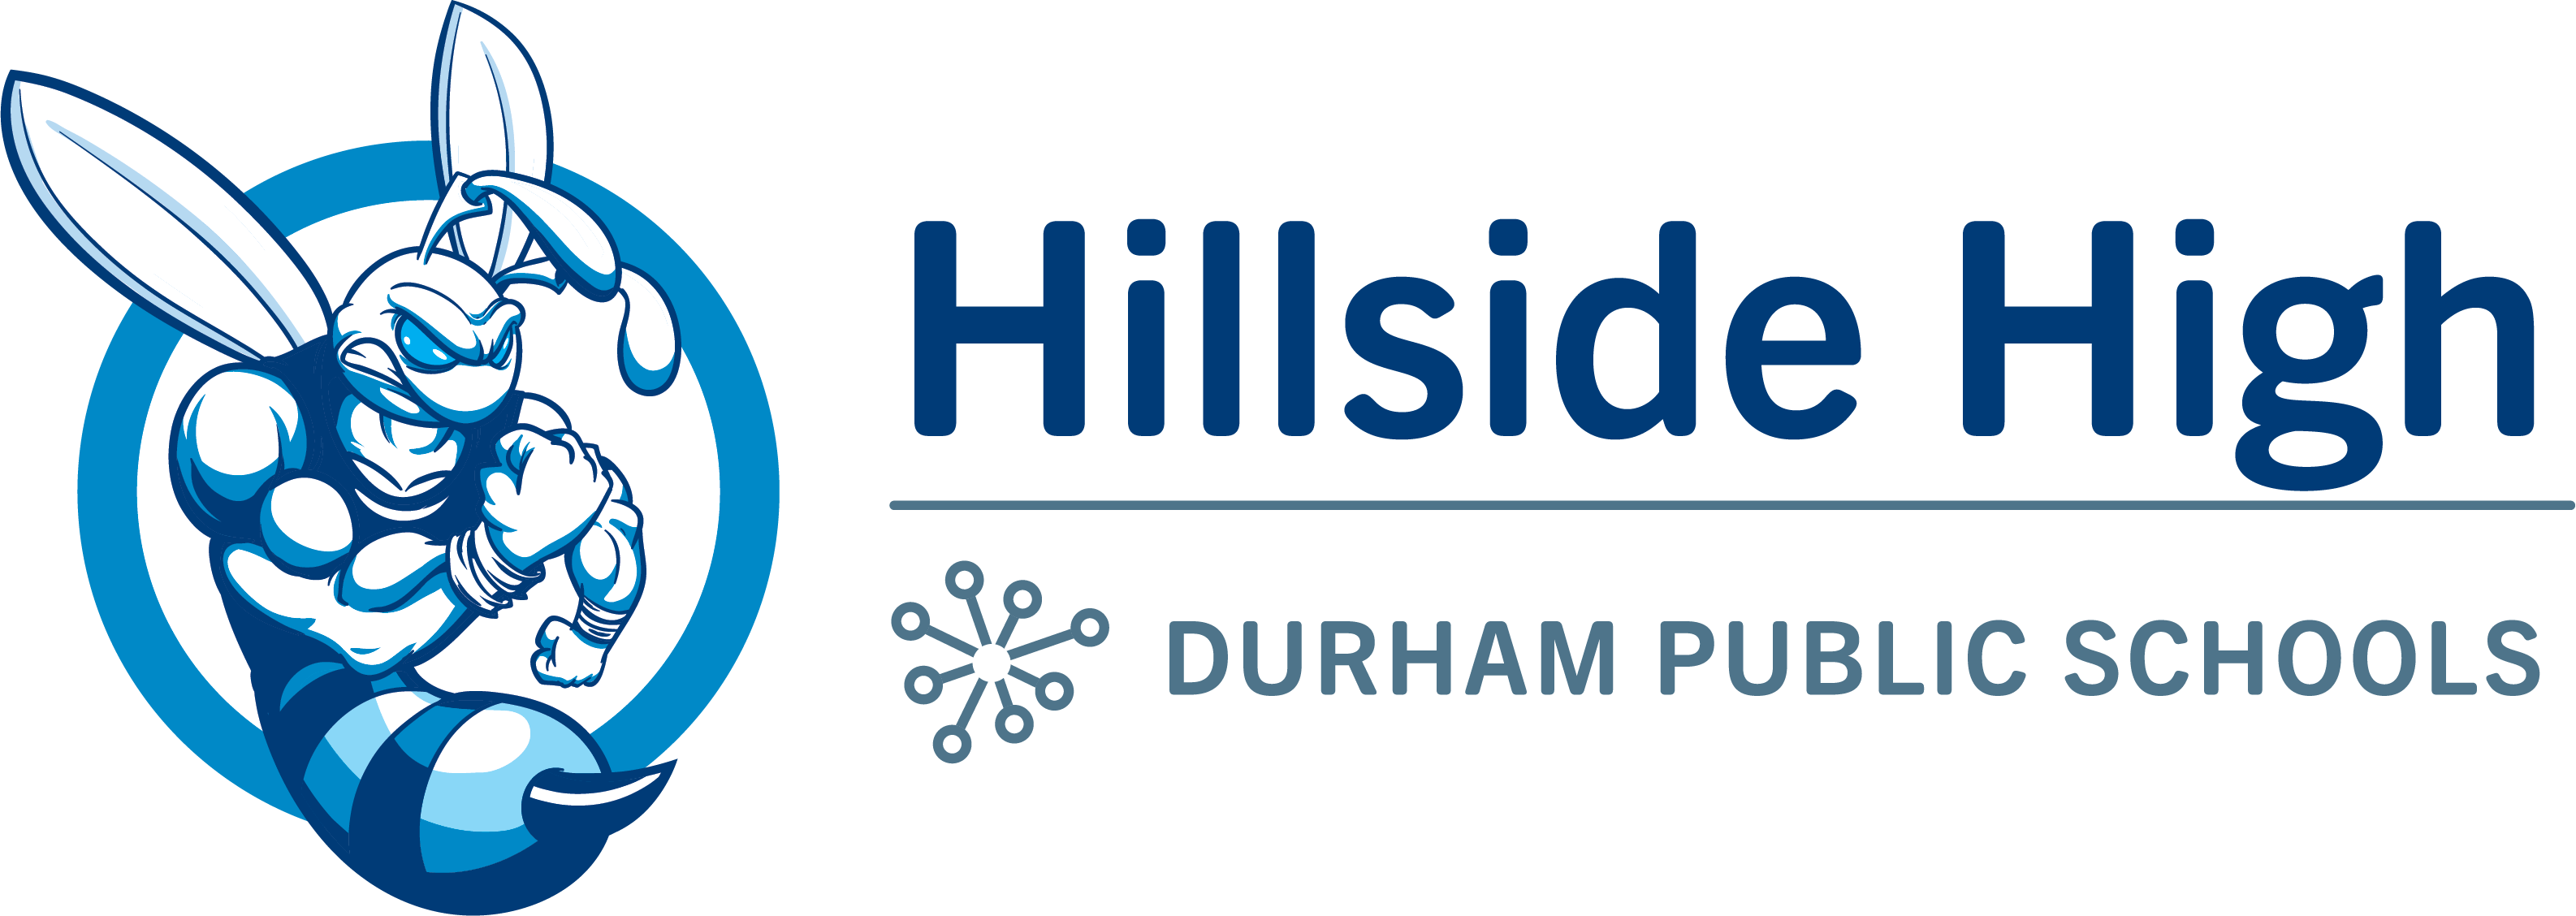 High School S Logo - Hillside High School / Homepage